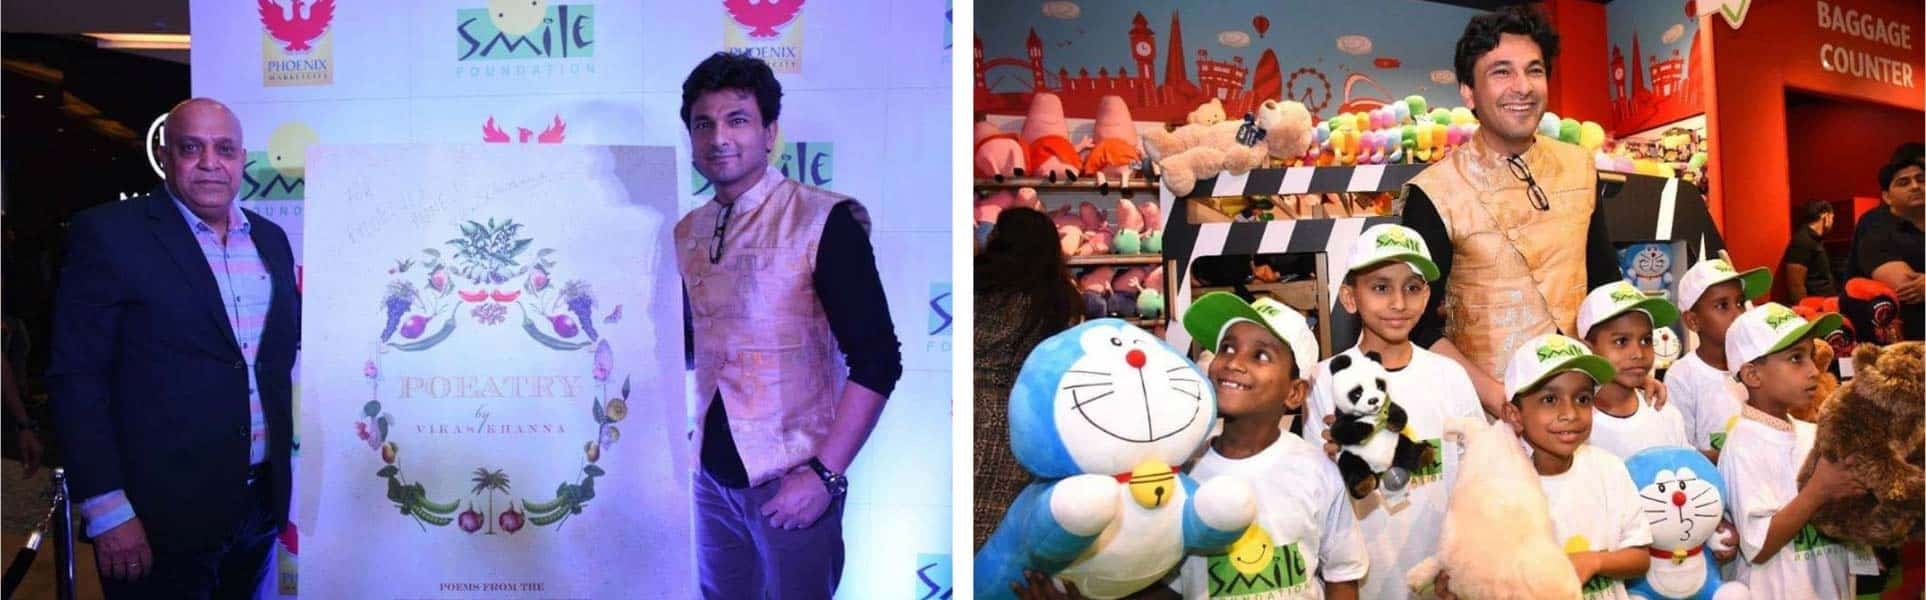 Celebrity Chef Vikas Khanna turns Santa for Smile Foundation kids